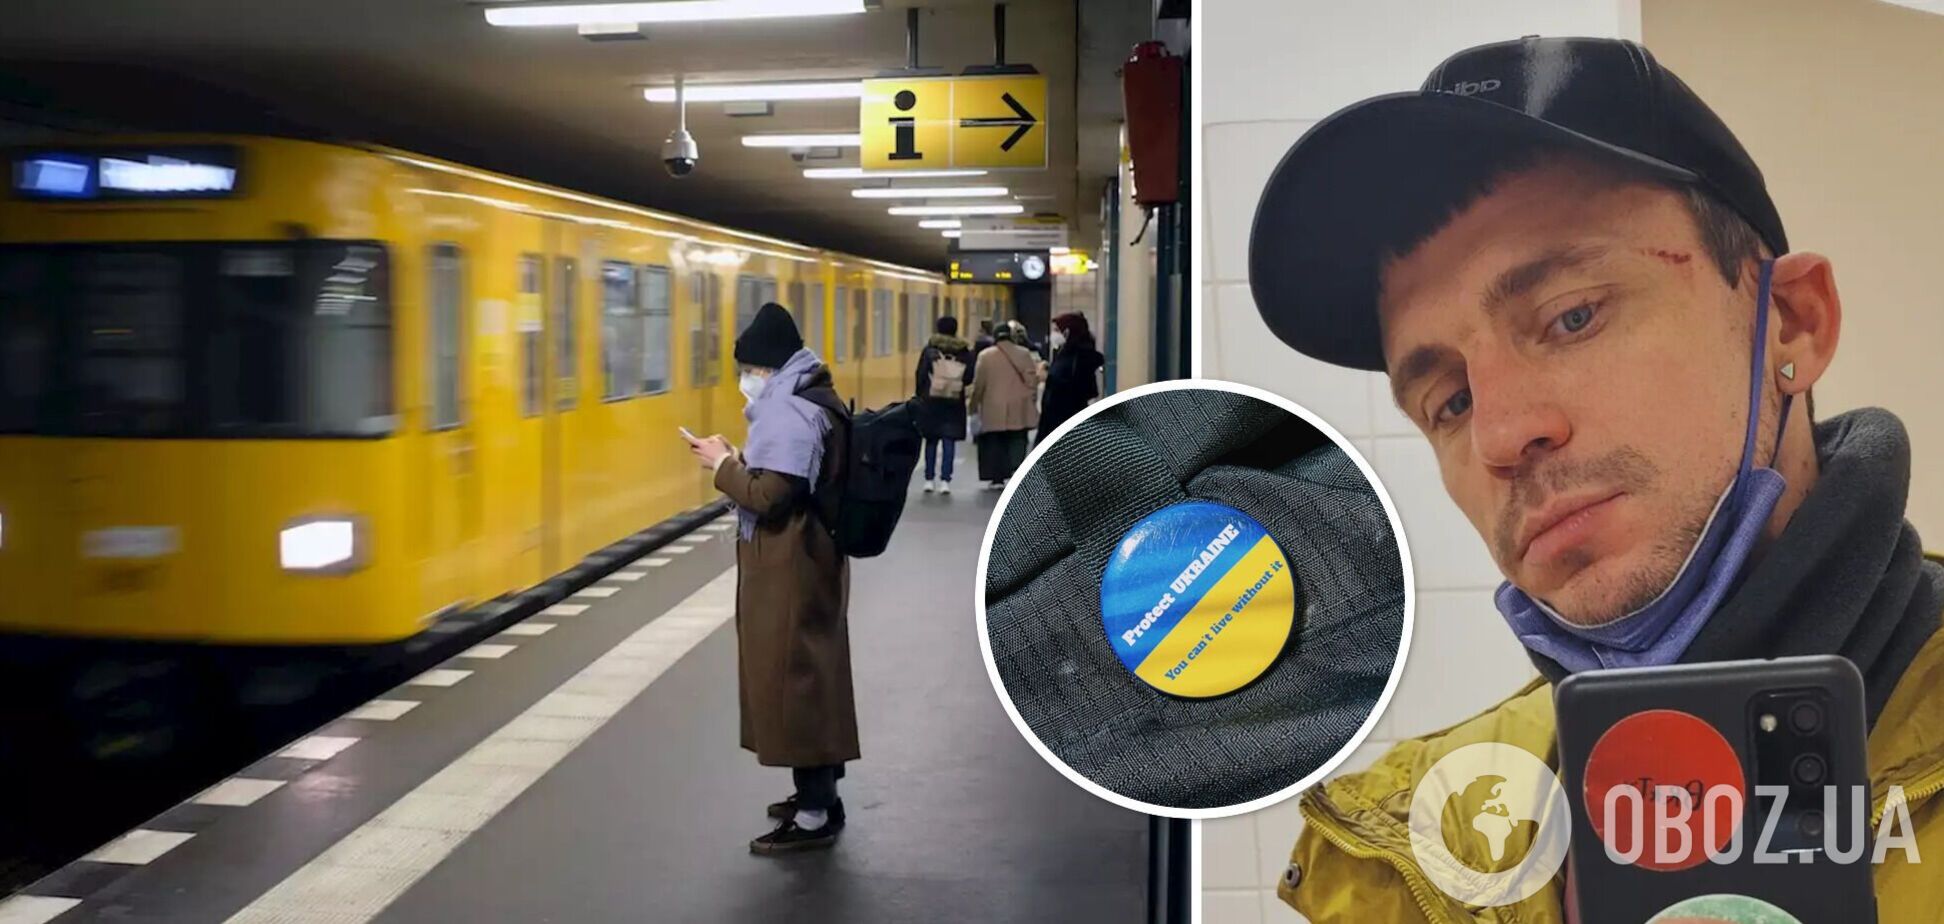 В метро Берлина избили украинца из-за значка с национальным флагом: подробности инцидента